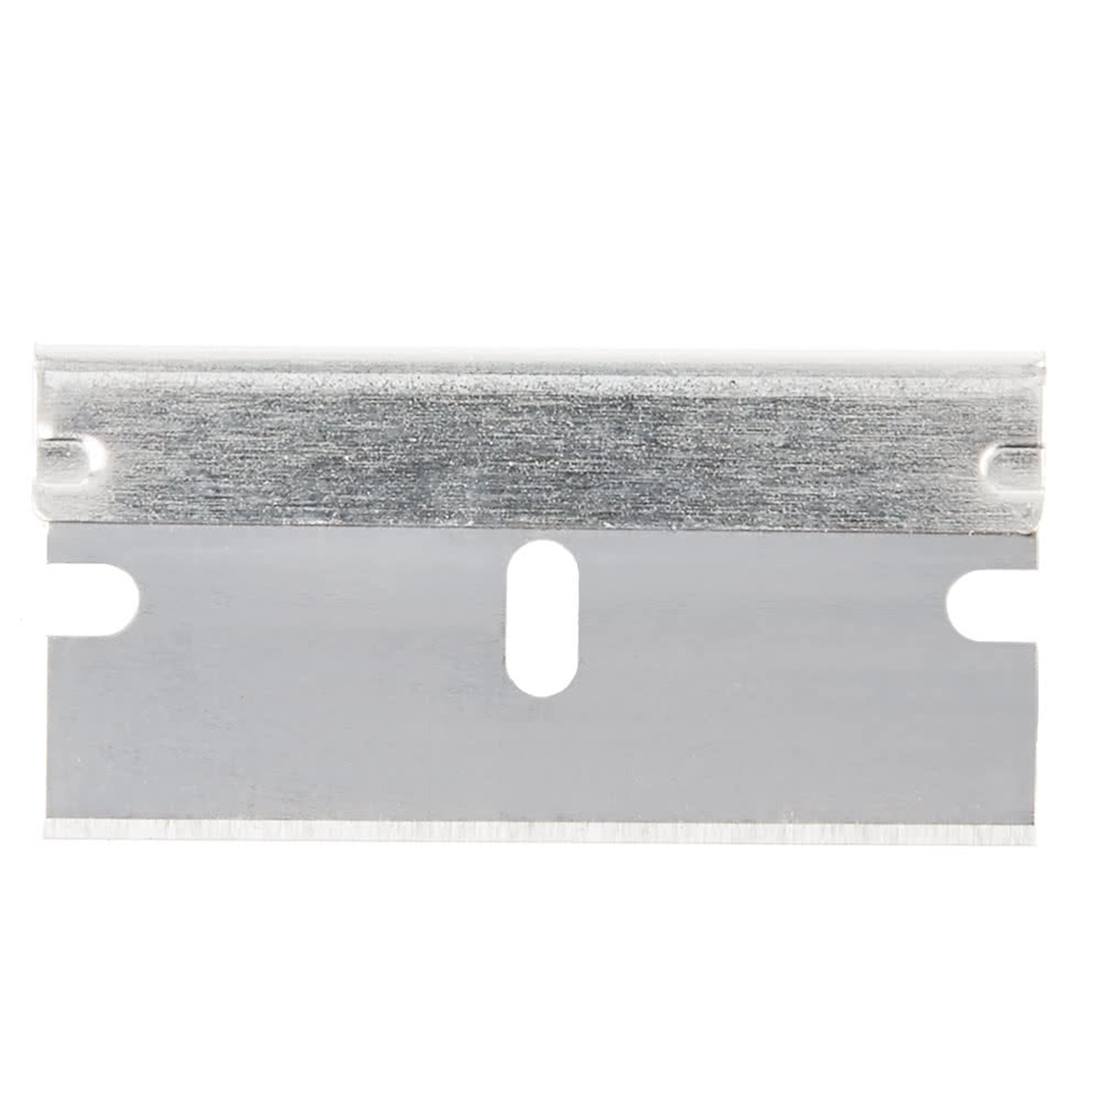 Moerman Pocket Scraper Replacement Blades - 1.5 Inch - Front View